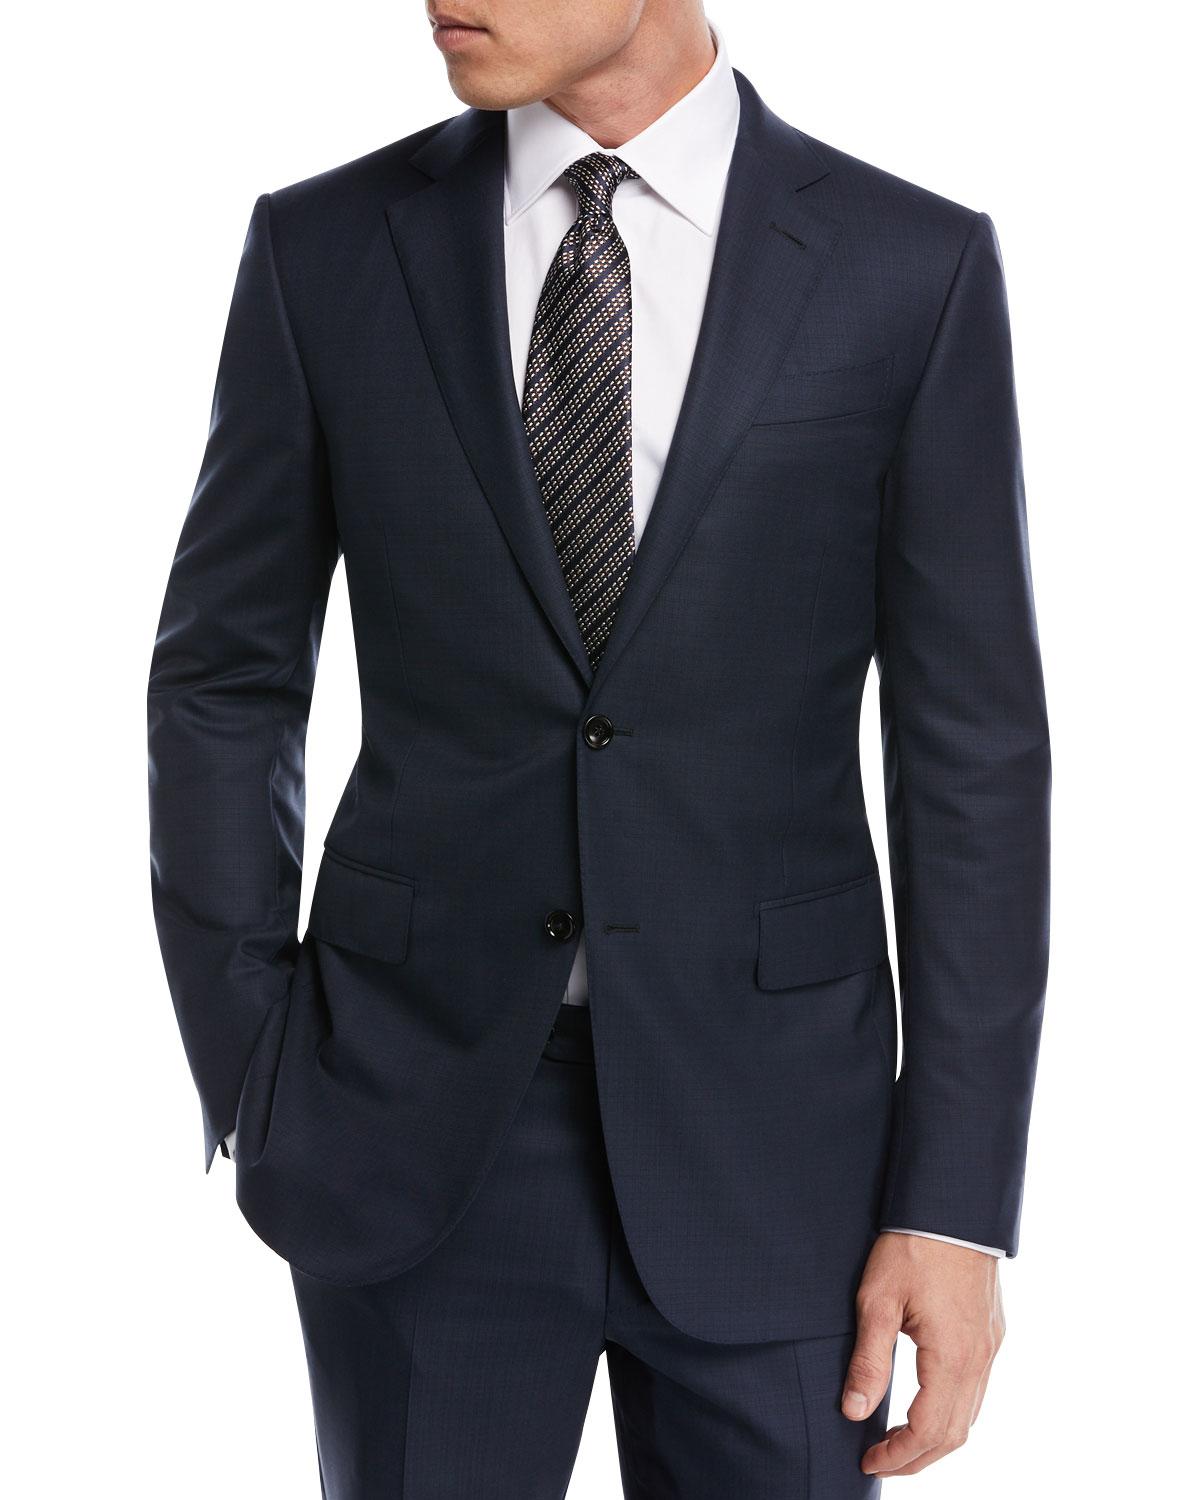 Lyst - Ermenegildo Zegna Tonal Plaid Wool Two-piece Suit in Blue for Men